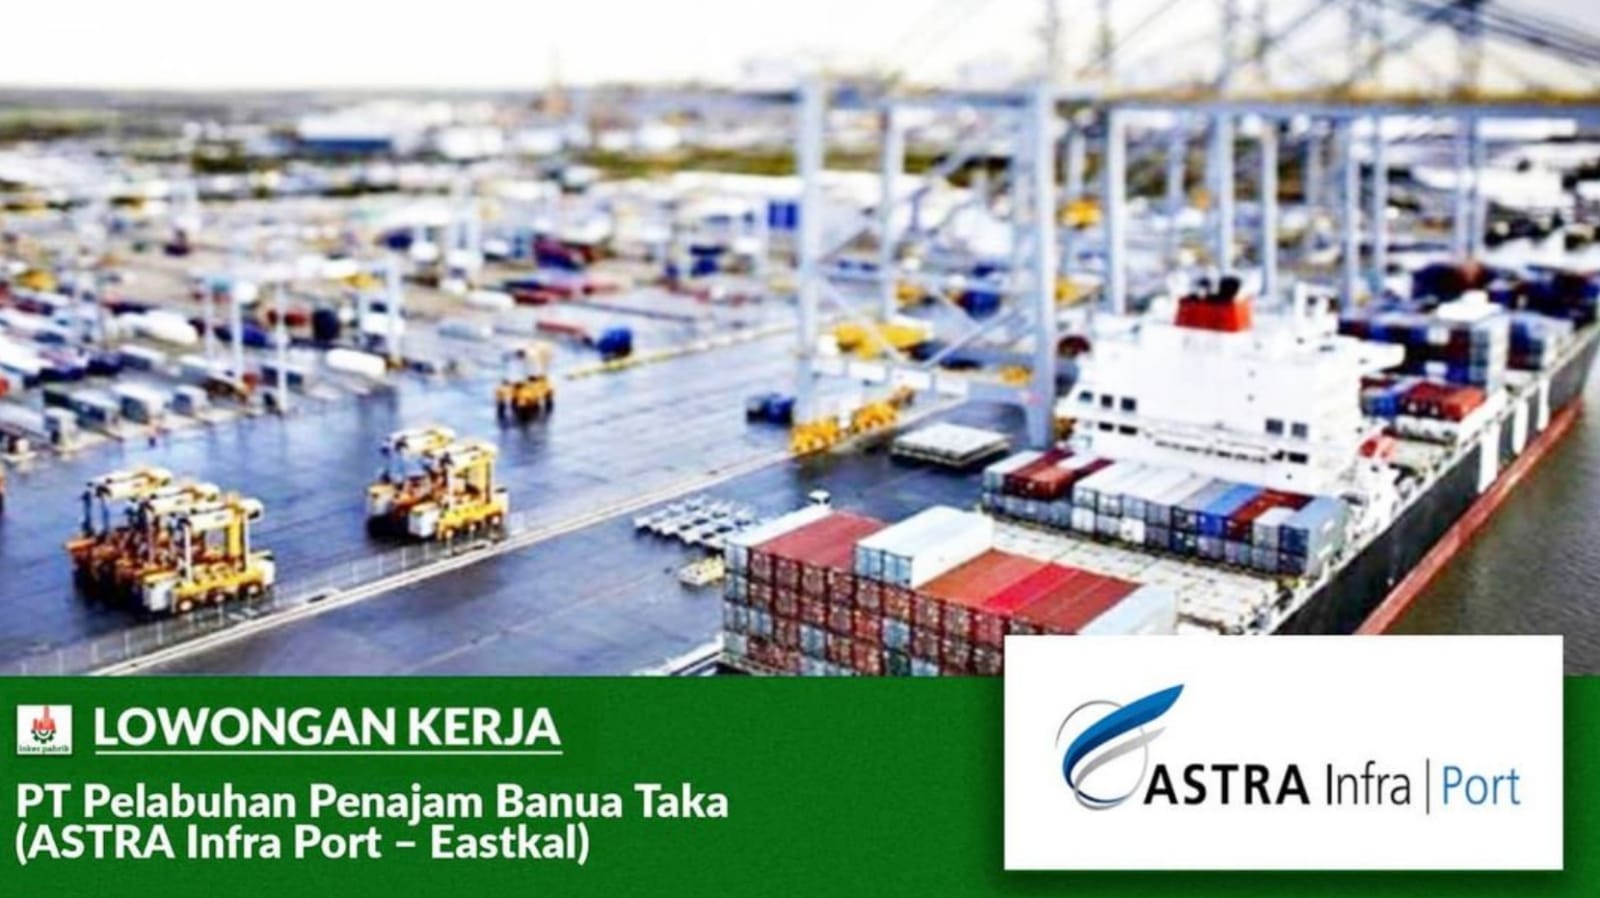 Lowongan Kerja PT Pelabuhan Penajam Banua Taka (ASTRA Infra Port – Eastkal)